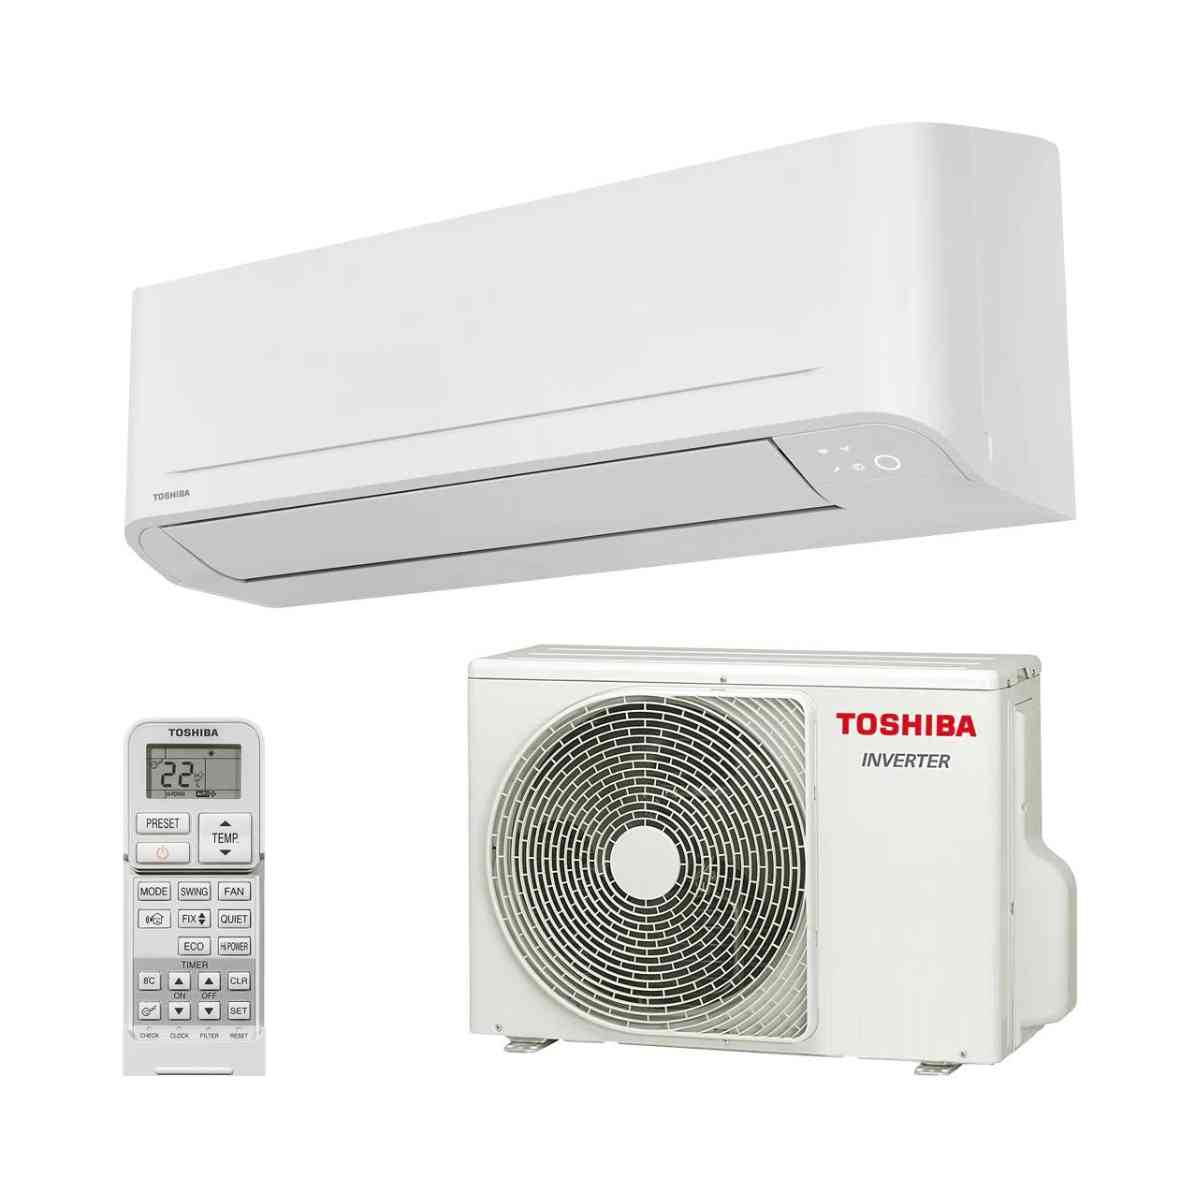 Ar condicionado fixo 1x1 Toshiba Seiya+ 16 4,2 kW 14000 BTU com referência SEIYA+ 16 da marca TOSHIBA